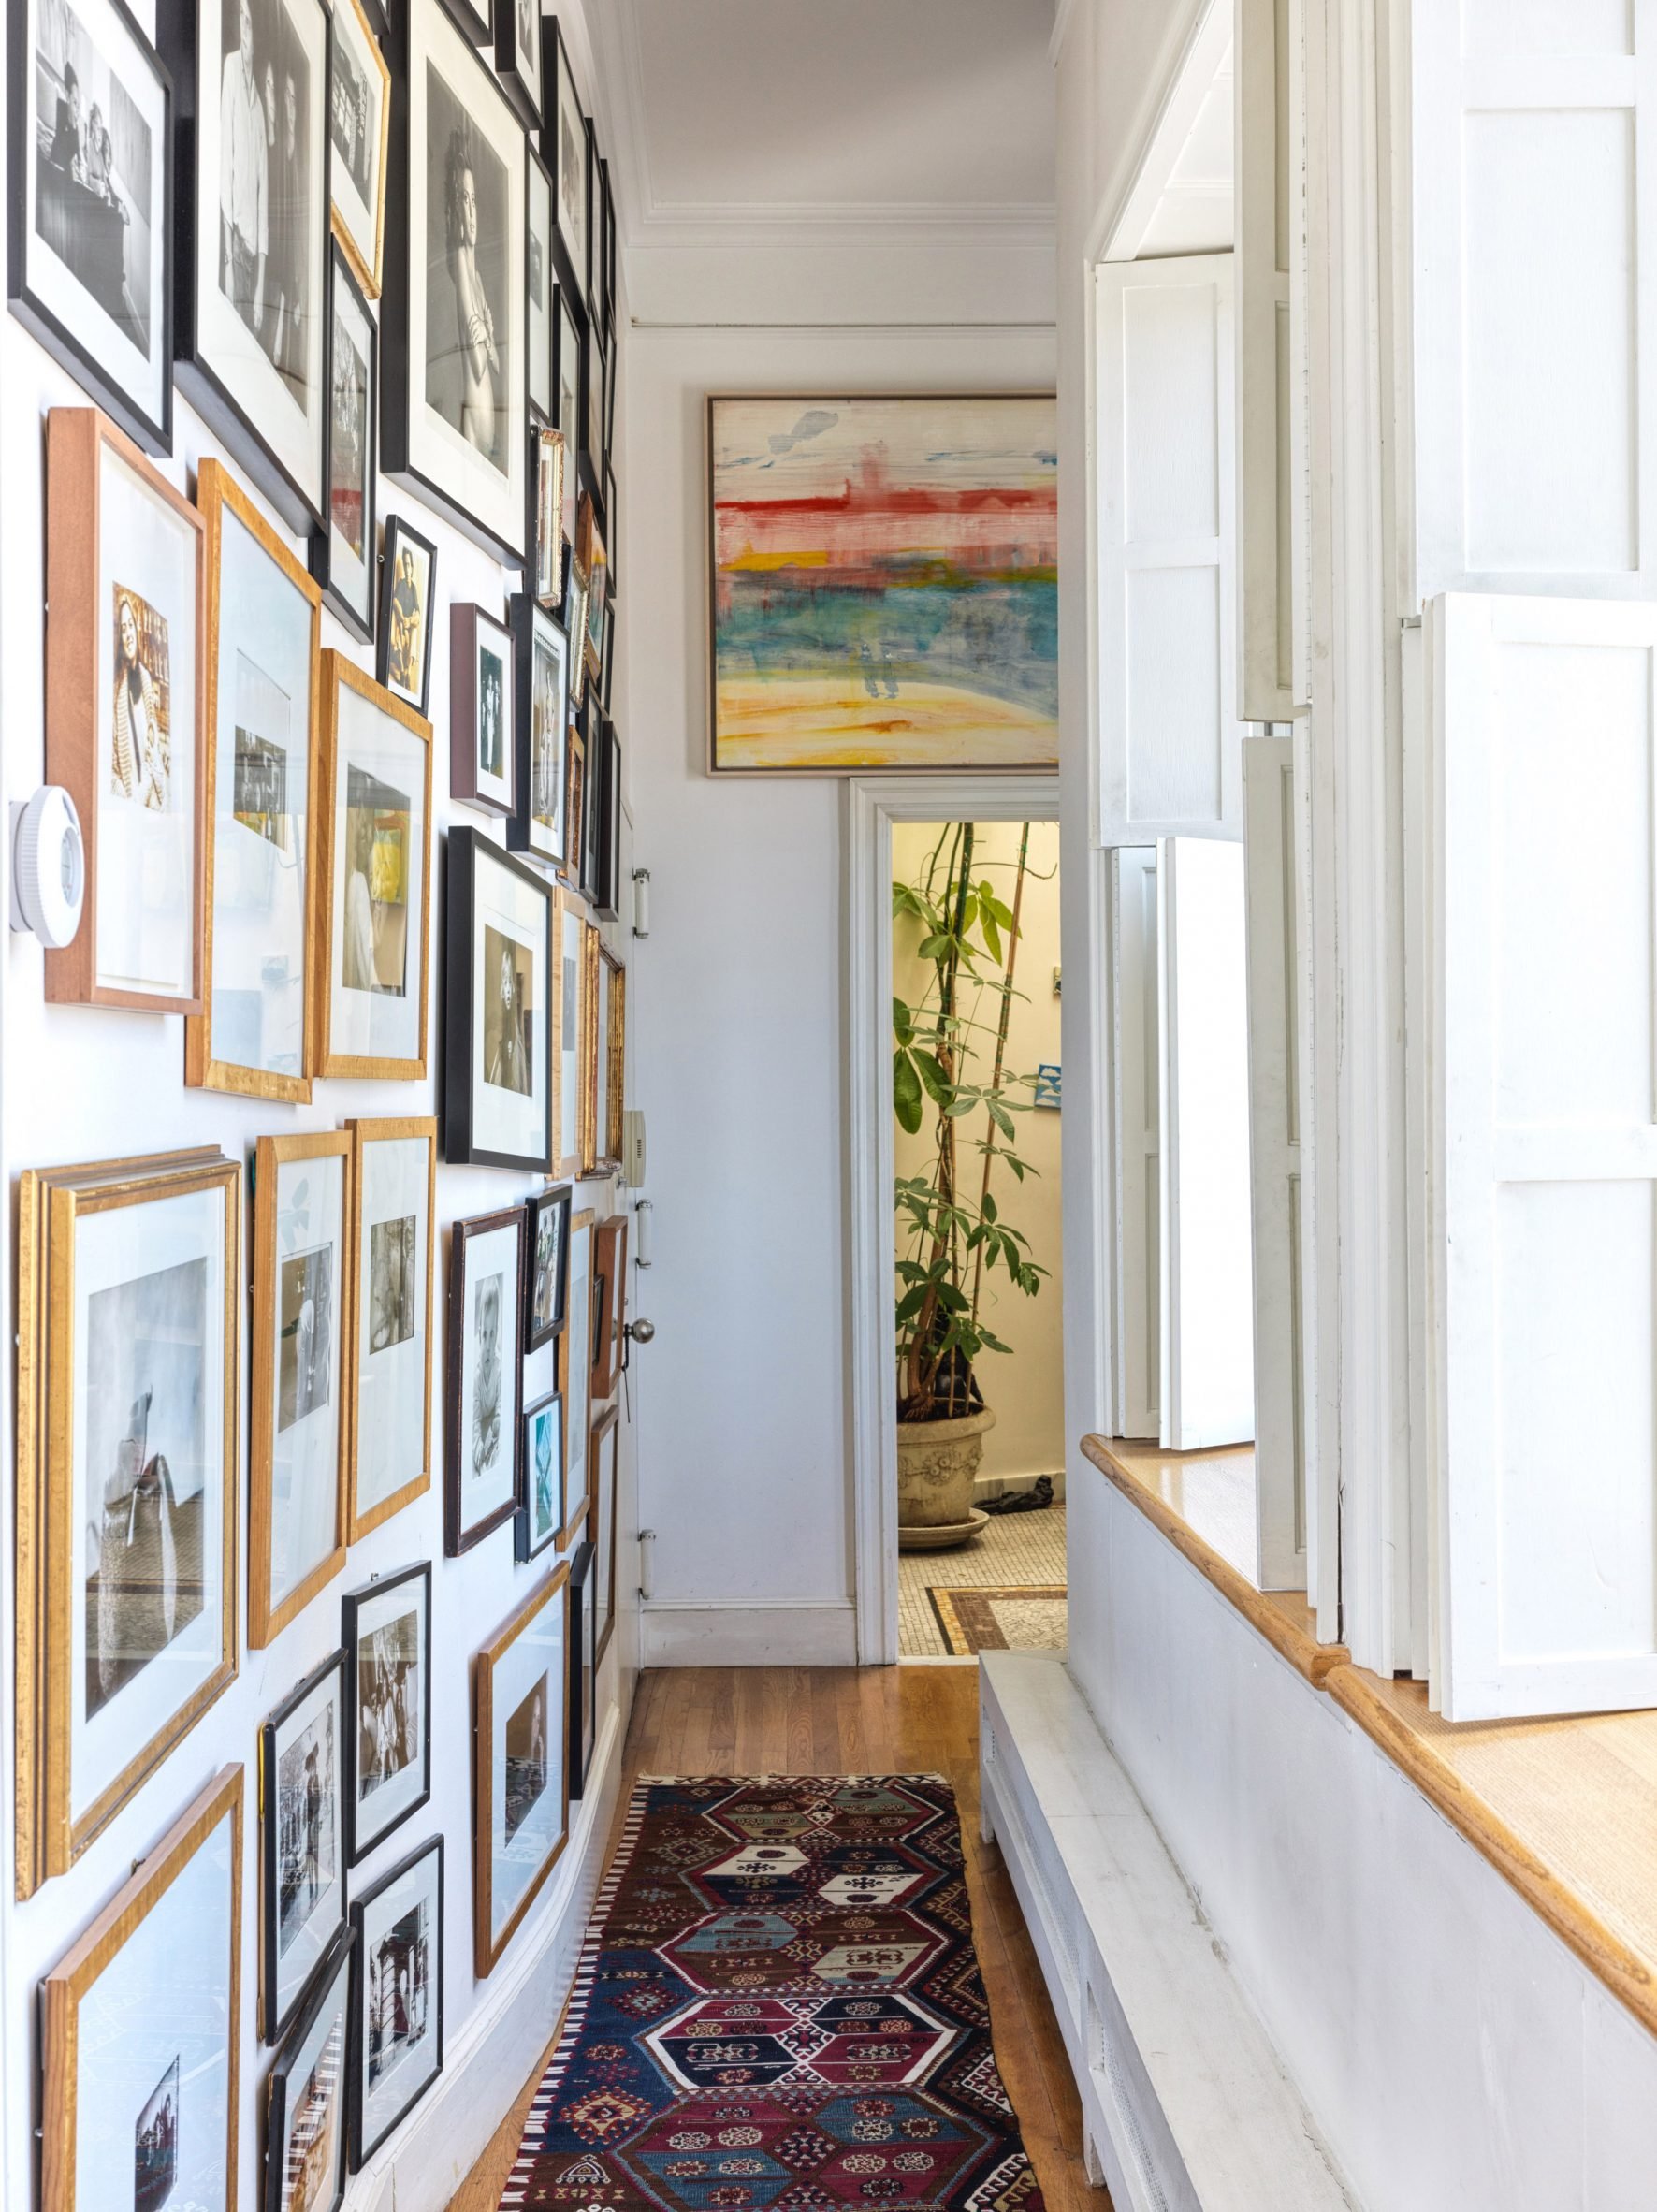 Hallway with artwork